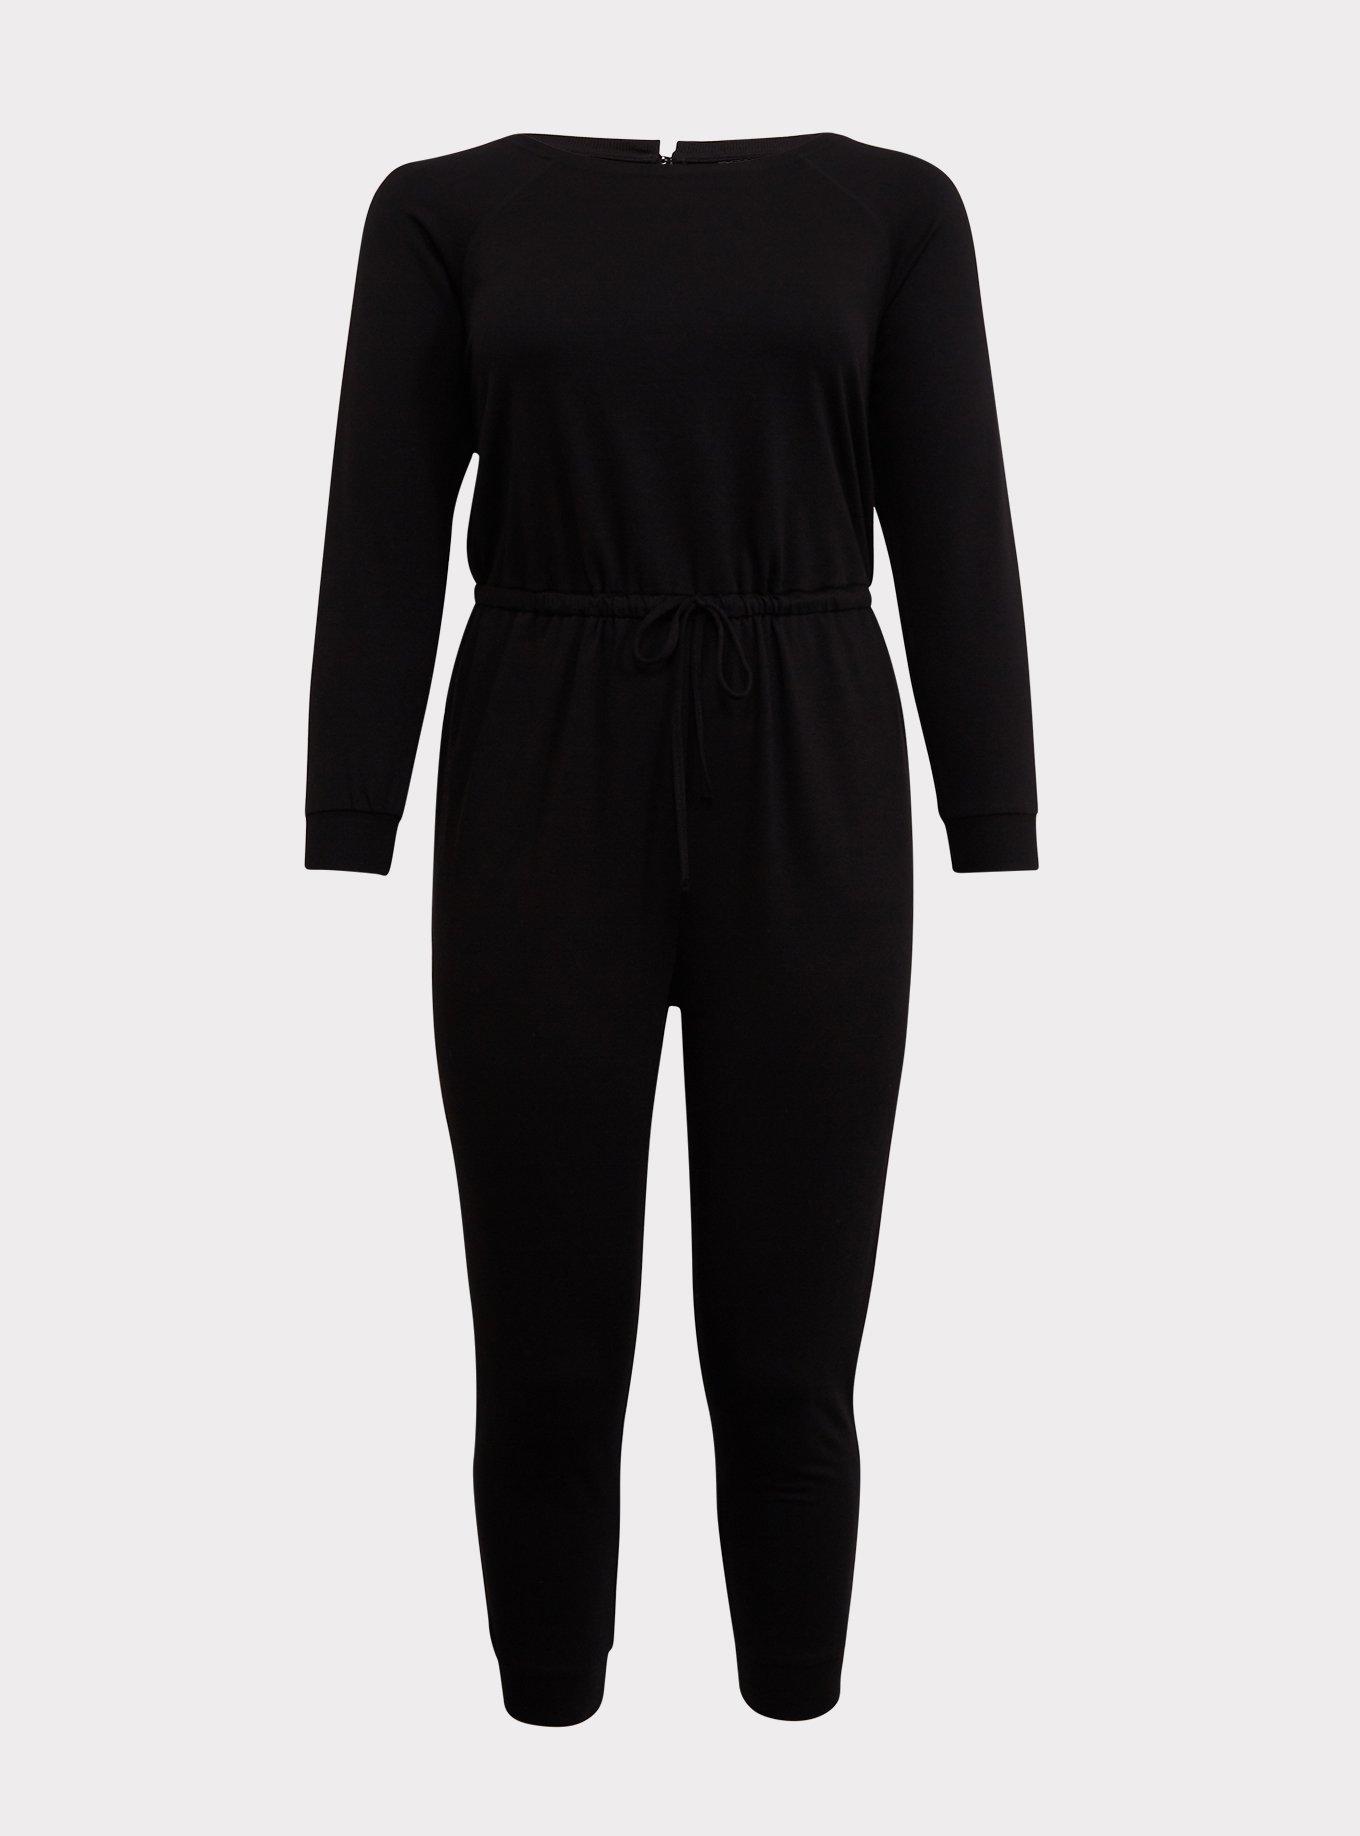 Plus Size - Black French Terry Drawstring Jumpsuit - Torrid